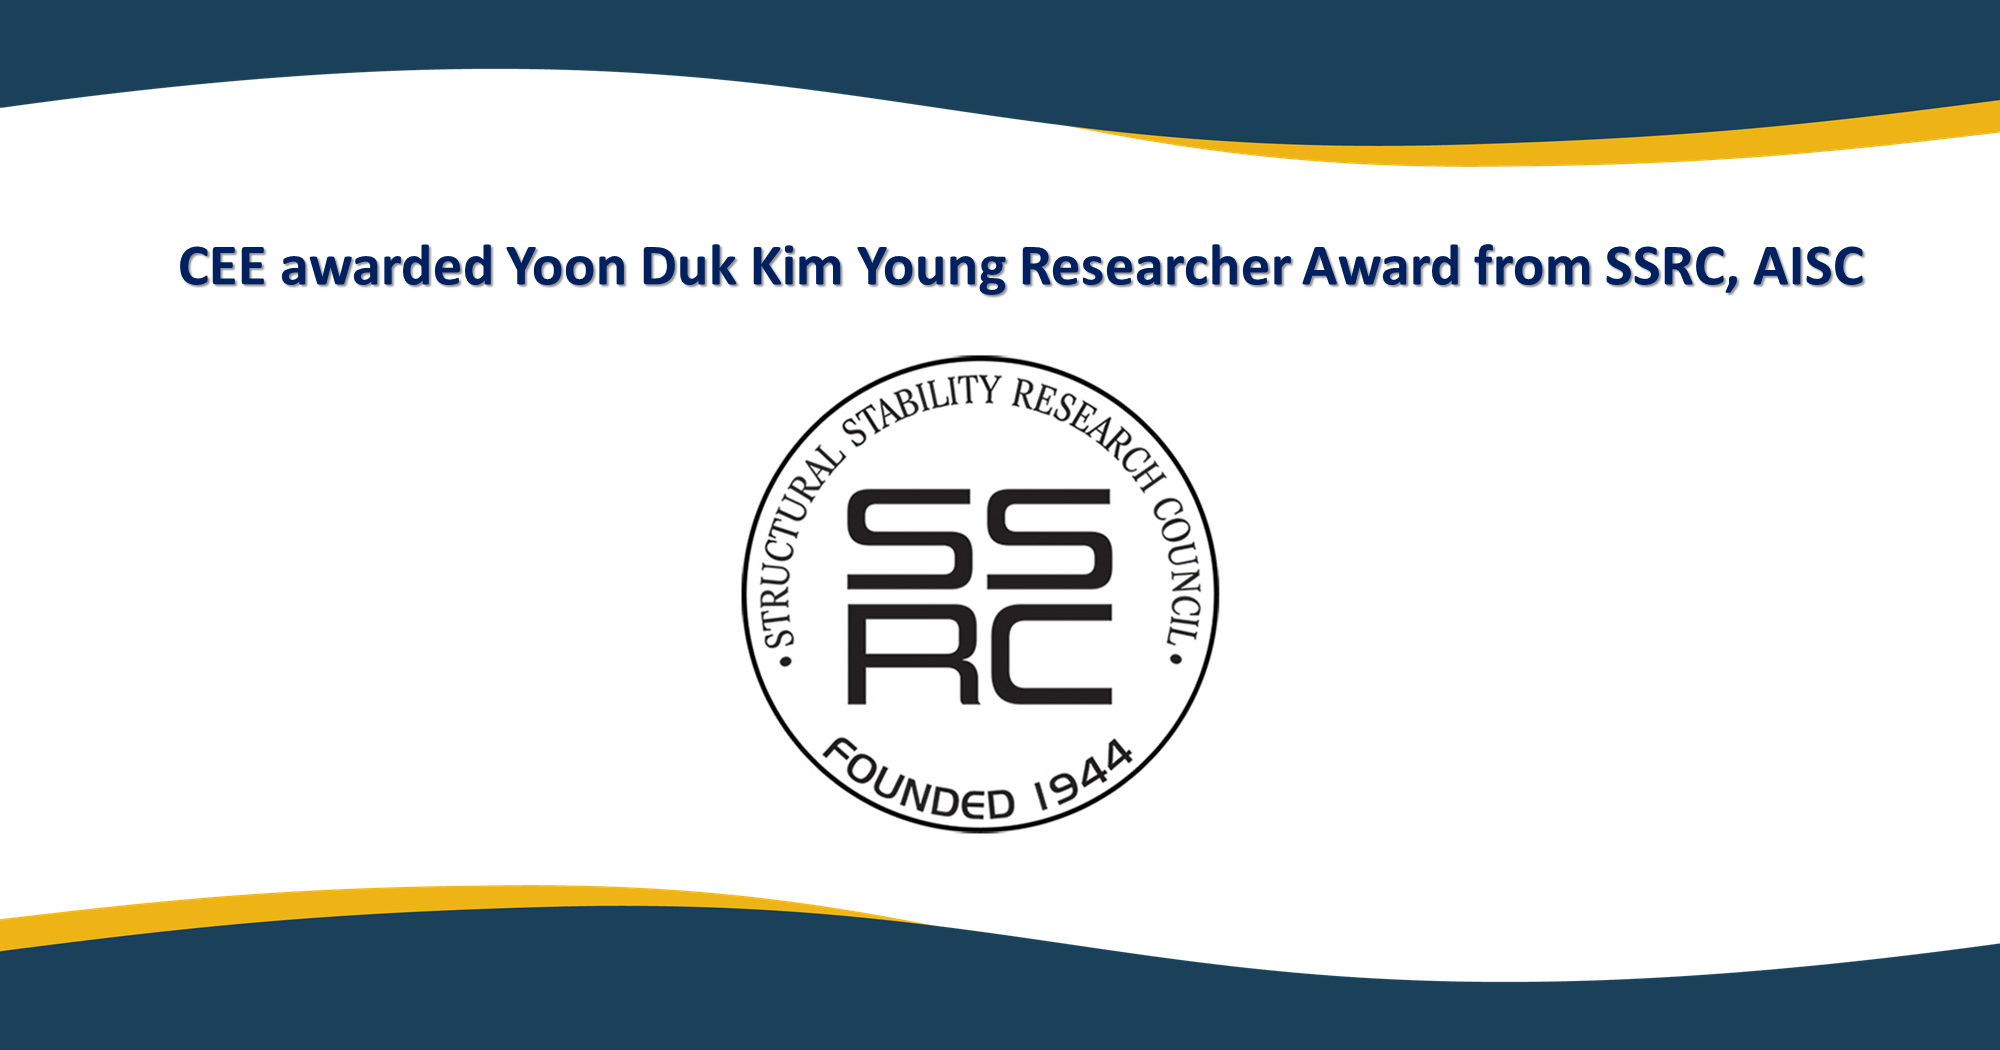 Yoon Duk Kim Young Researcher Award from SSRC, AISC